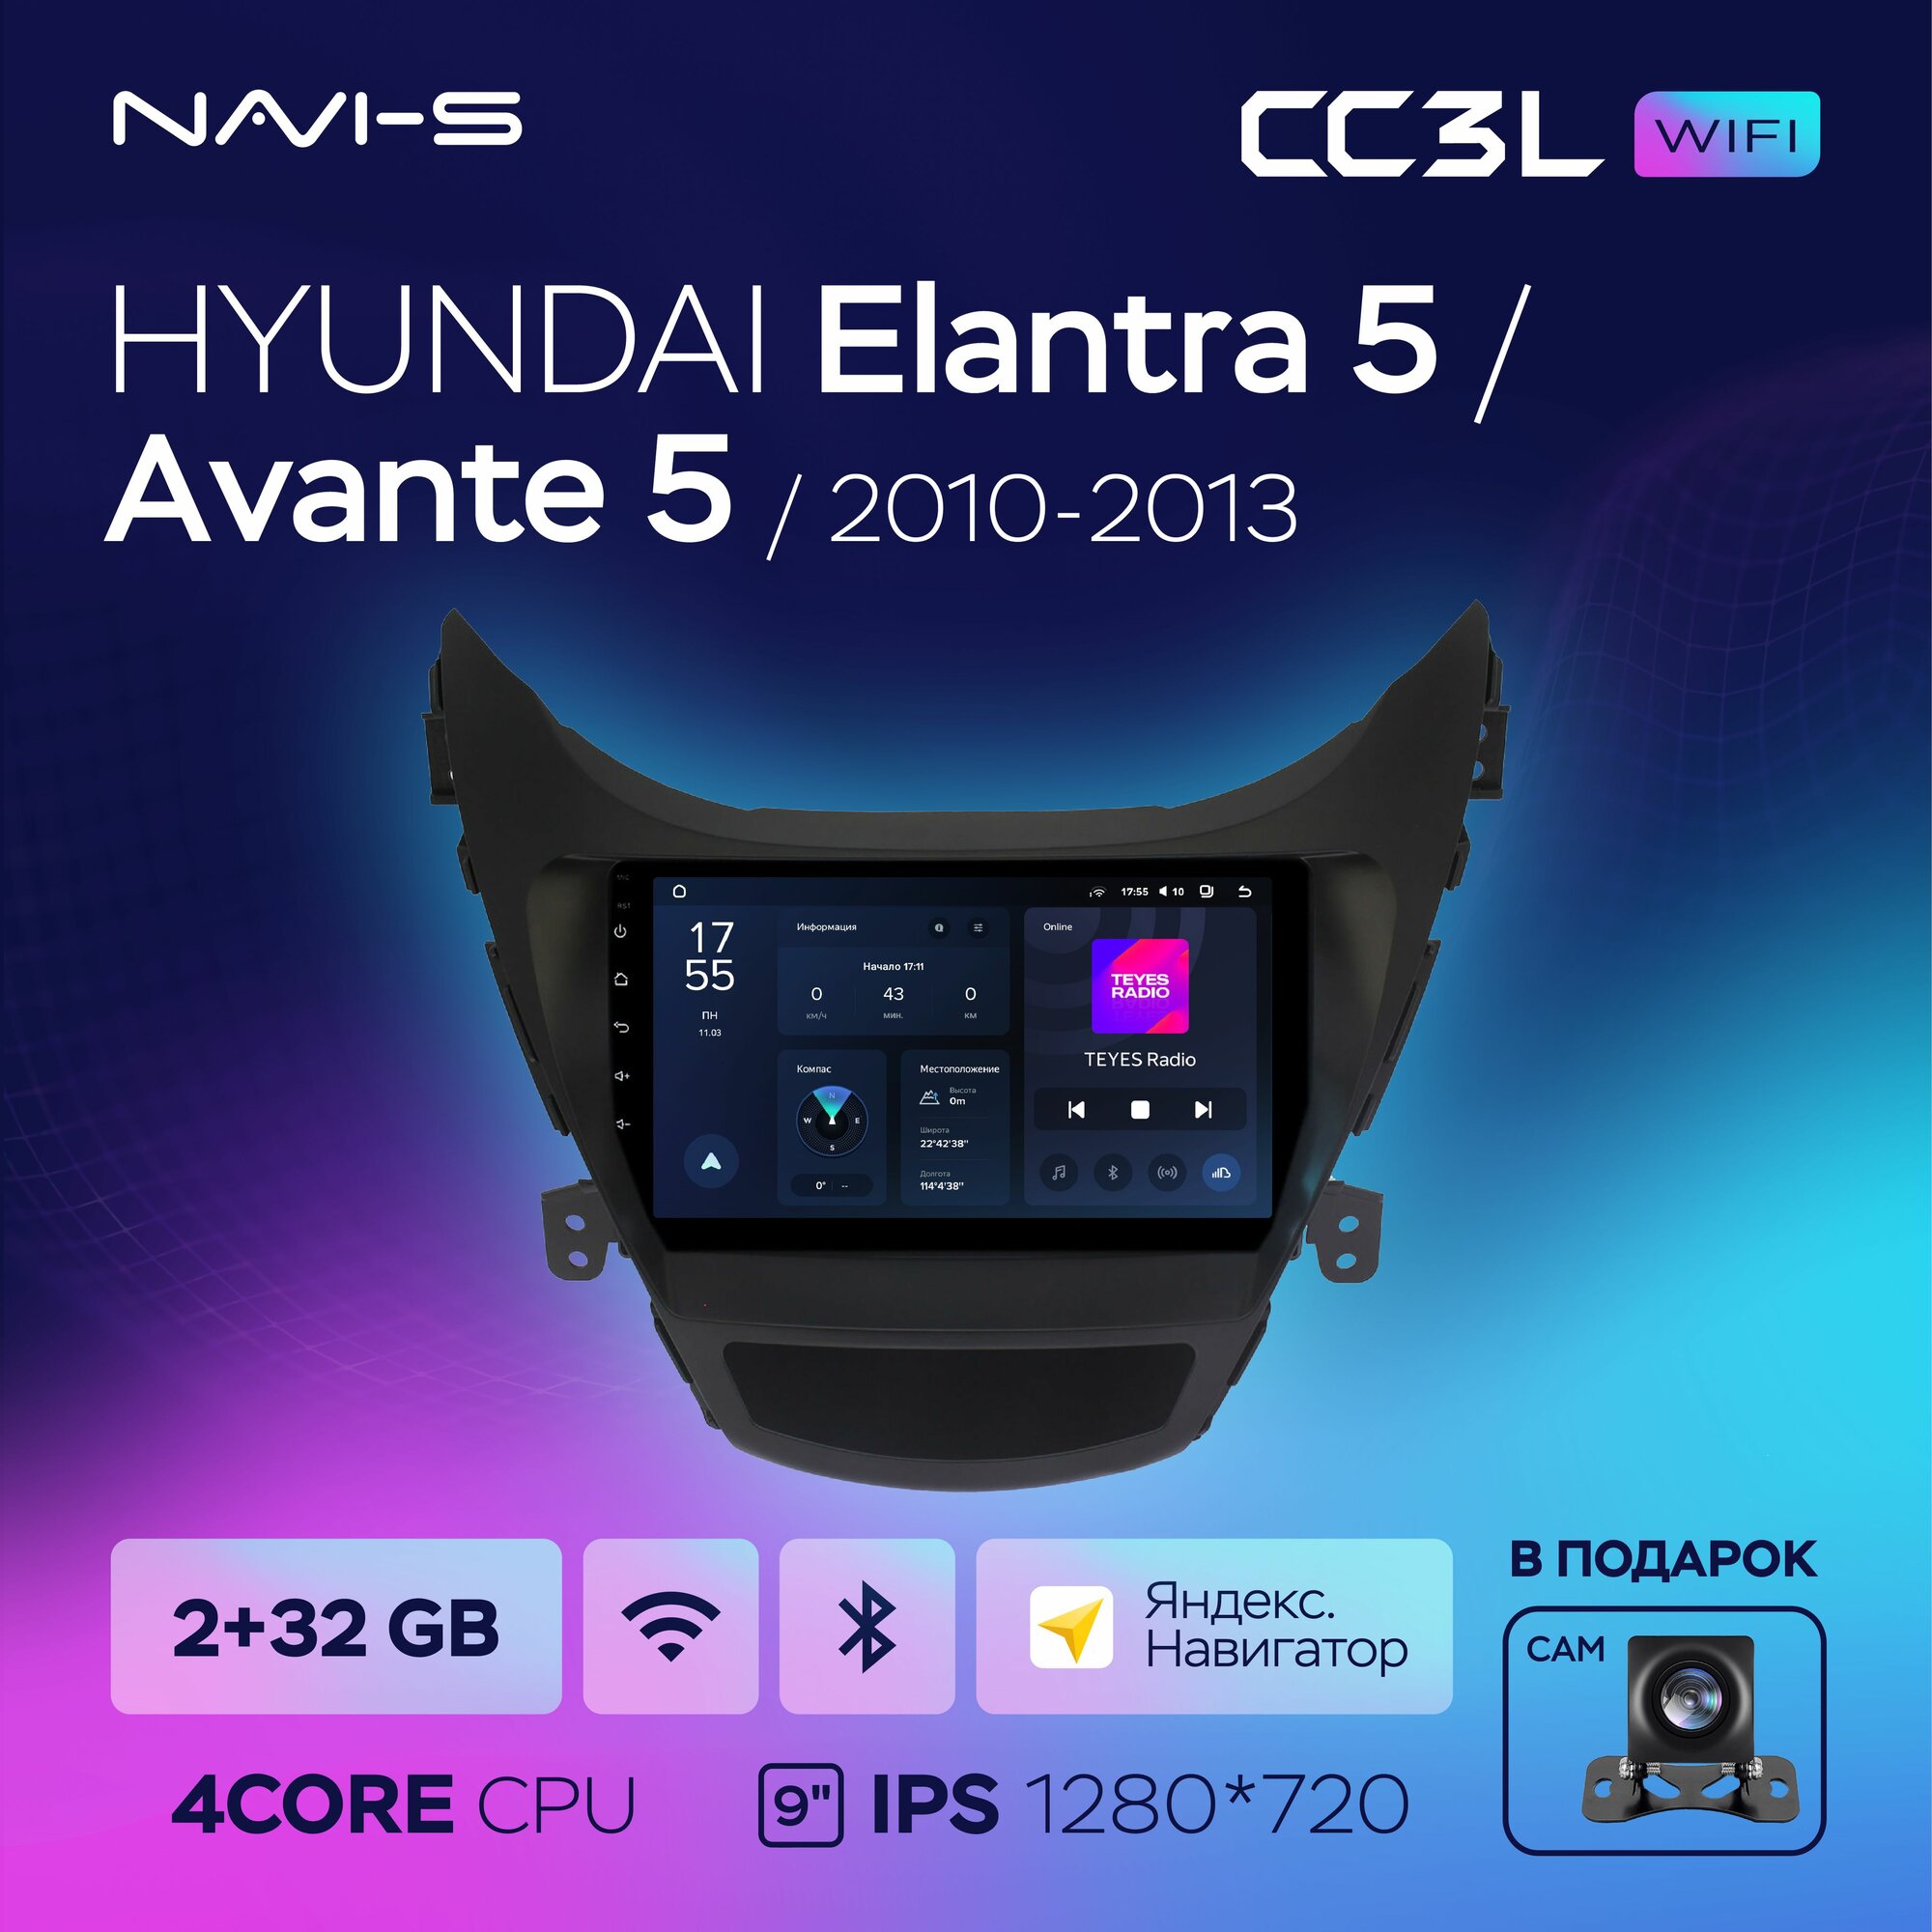 Автомагнитола Teyes CC3L Wi-Fi 2/32GB для Hyundai Elantra 5 / Avante 5 (Хендай Элантра 5 / Аванте 5) 2010 - 2013